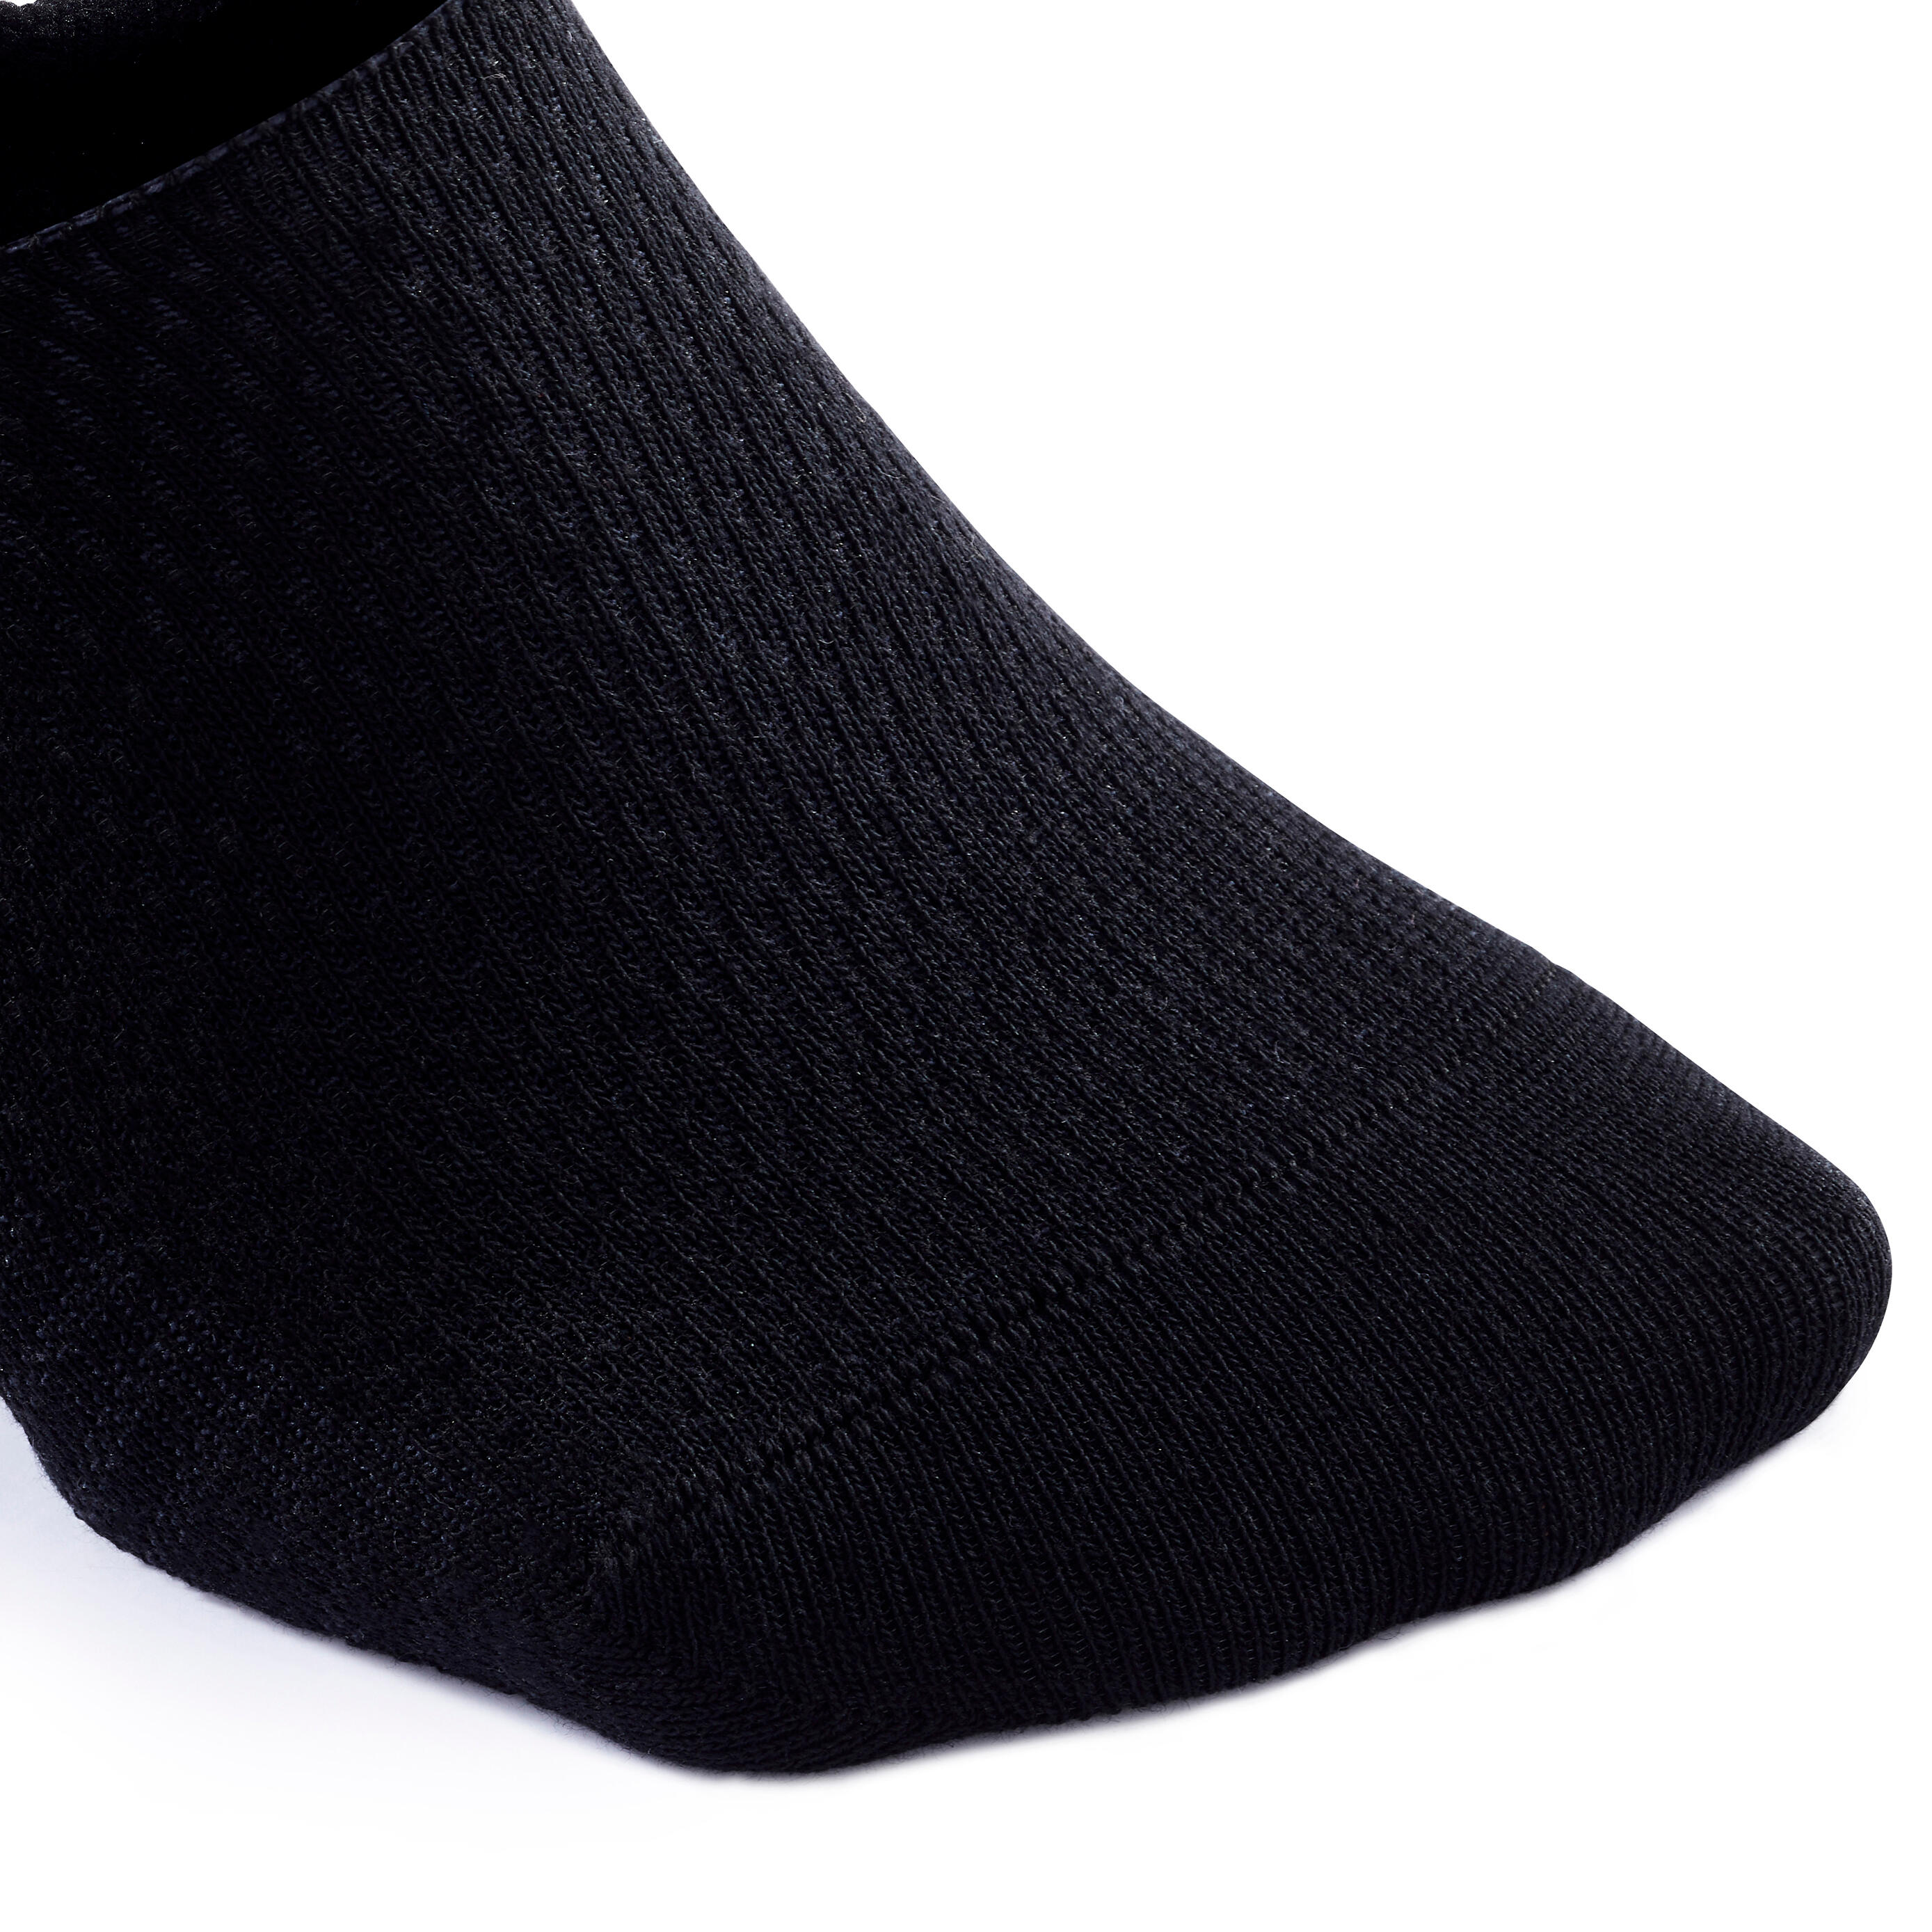 Invisible walking socks - pack of 2 pairs - black 3/4